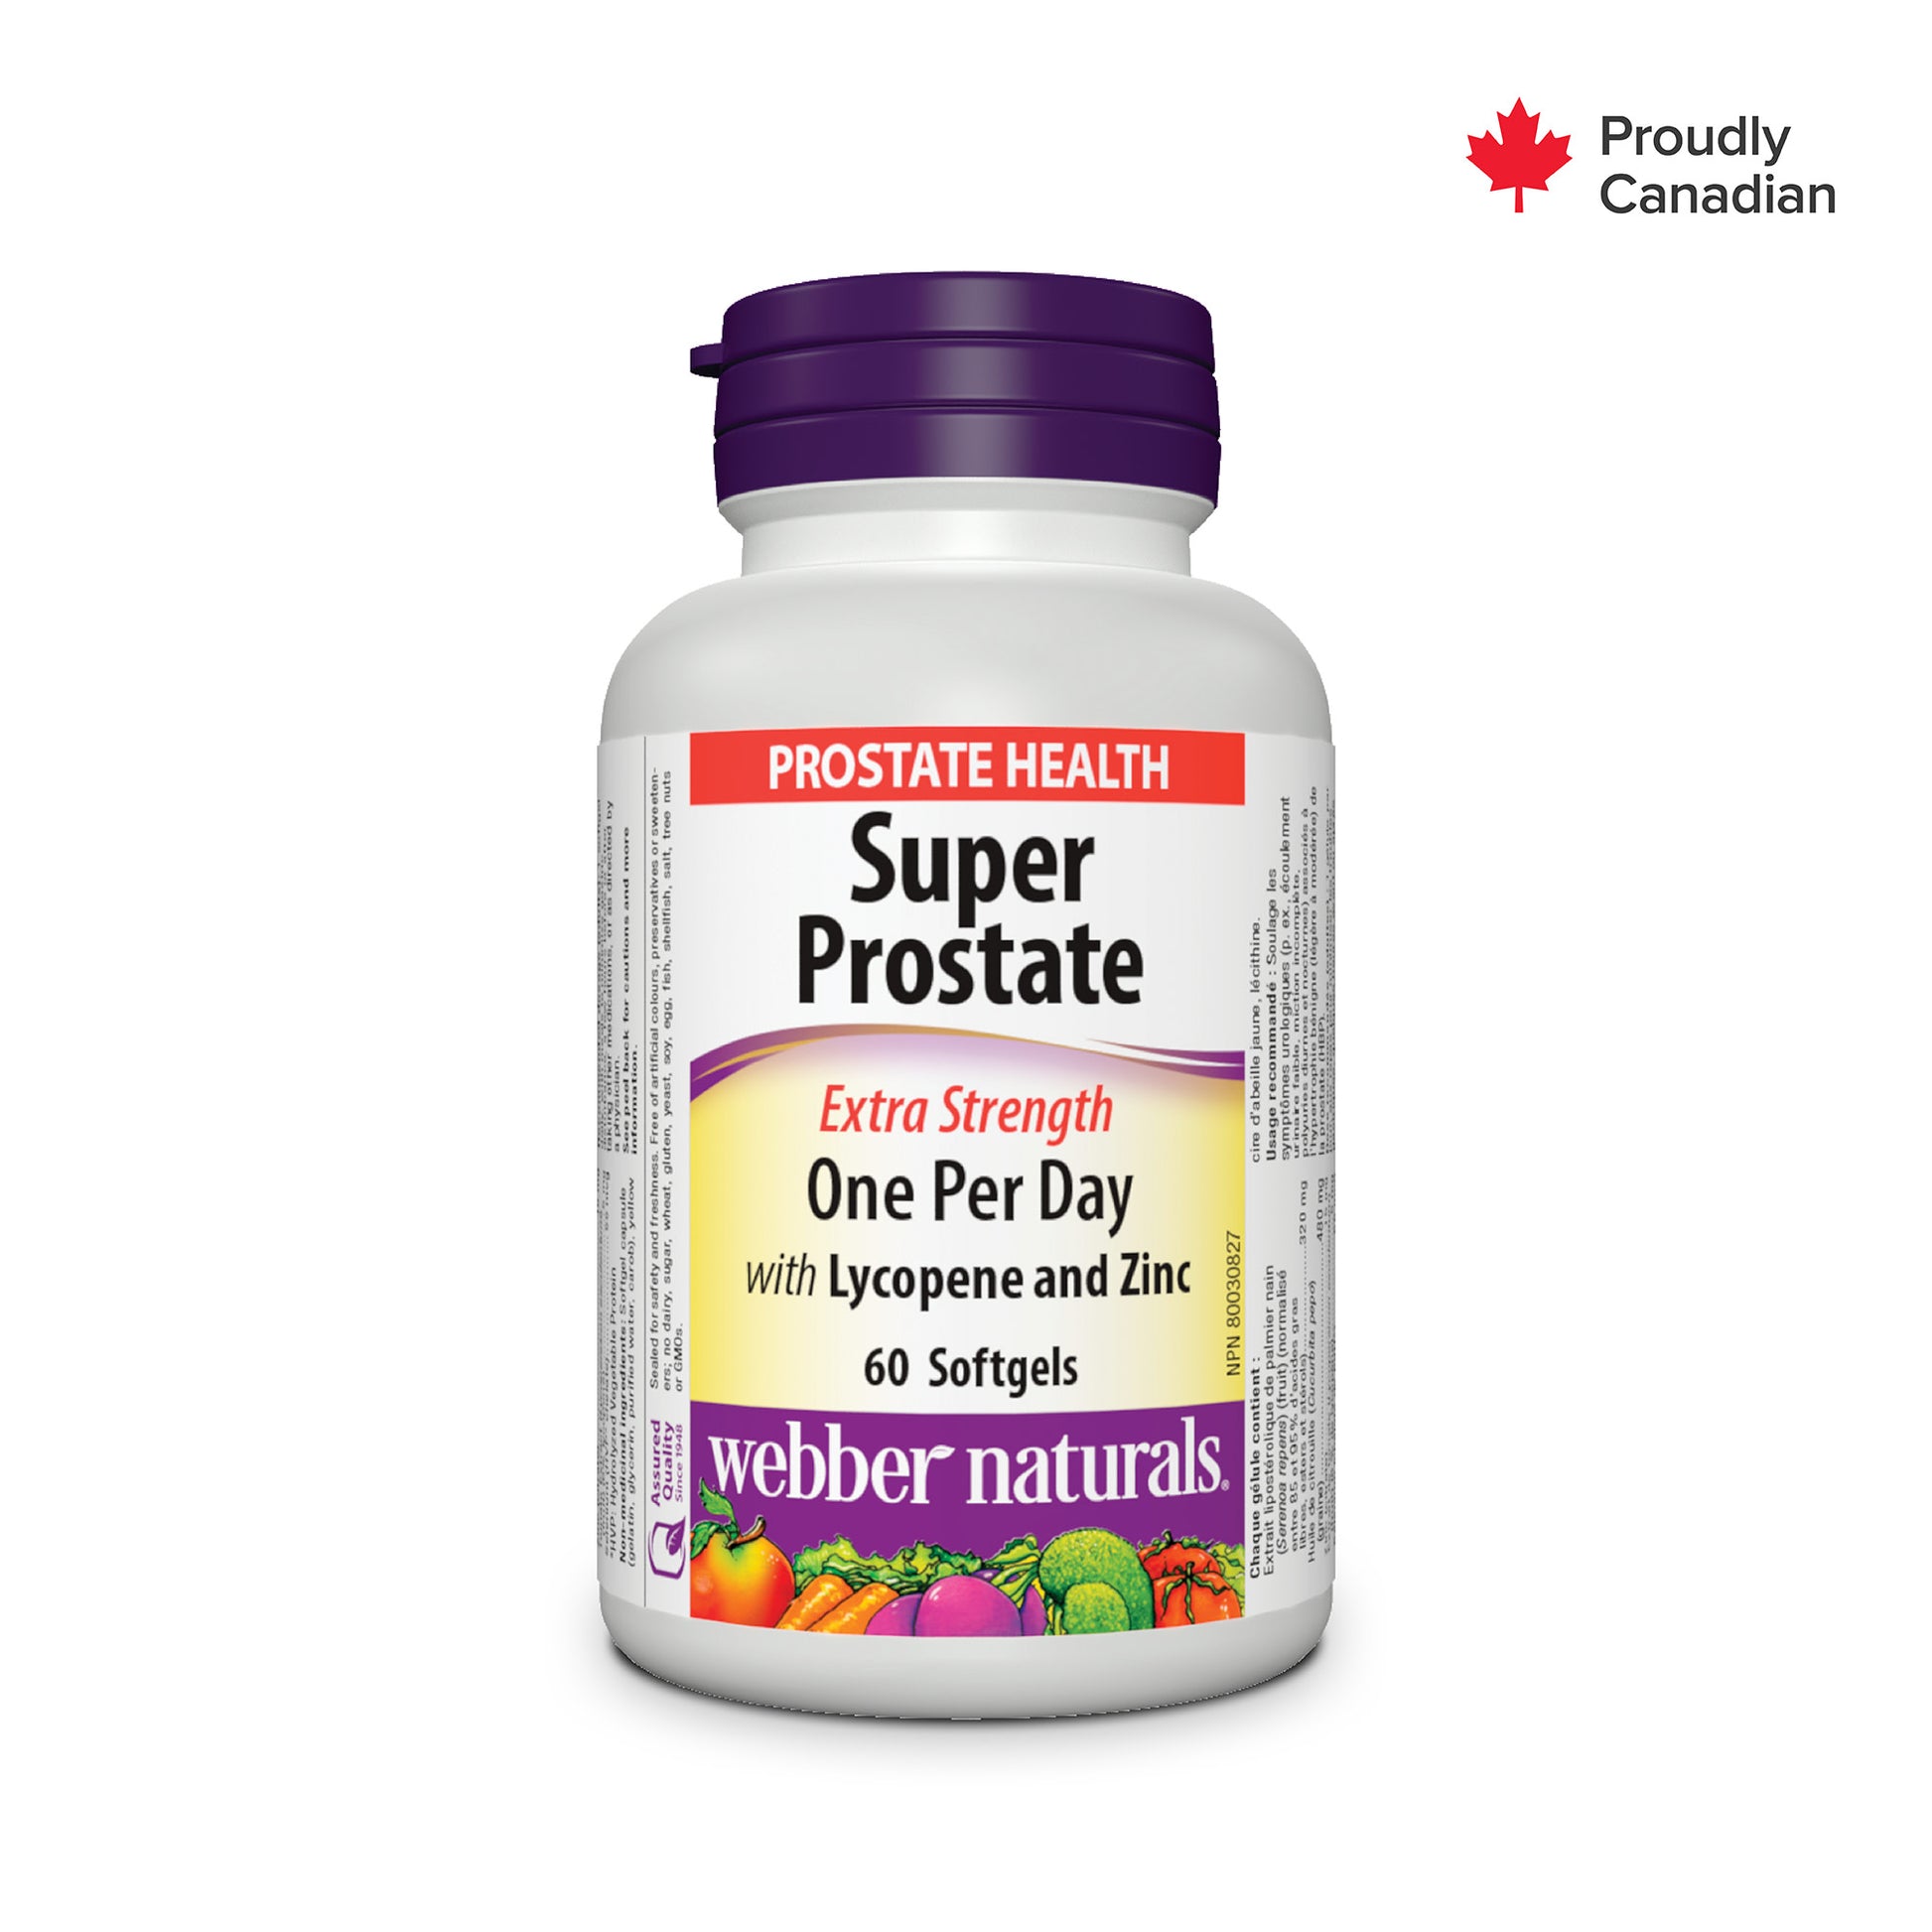 Super Prostate Extra Strength One Per Day for Webber Naturals|v|hi-res|WN3403